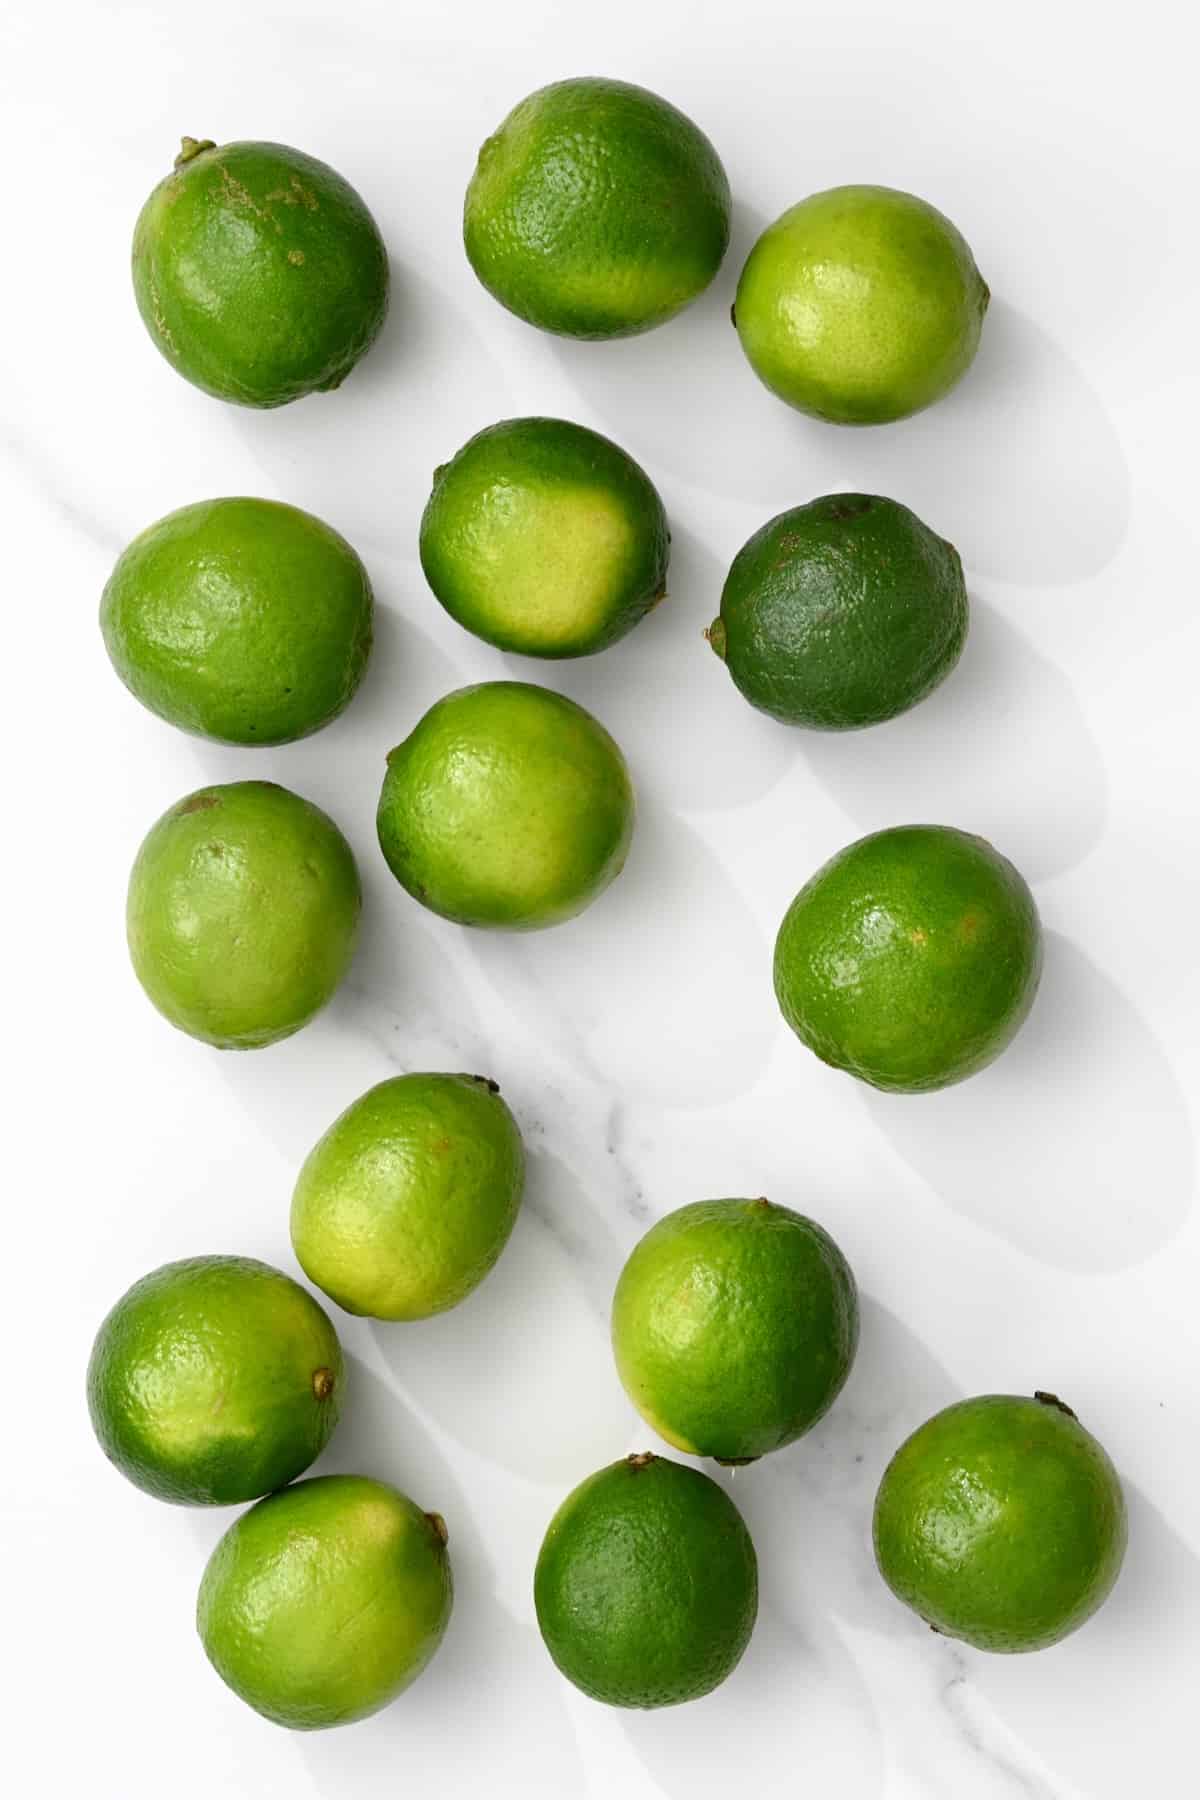 Fifteen limes on a flat surface